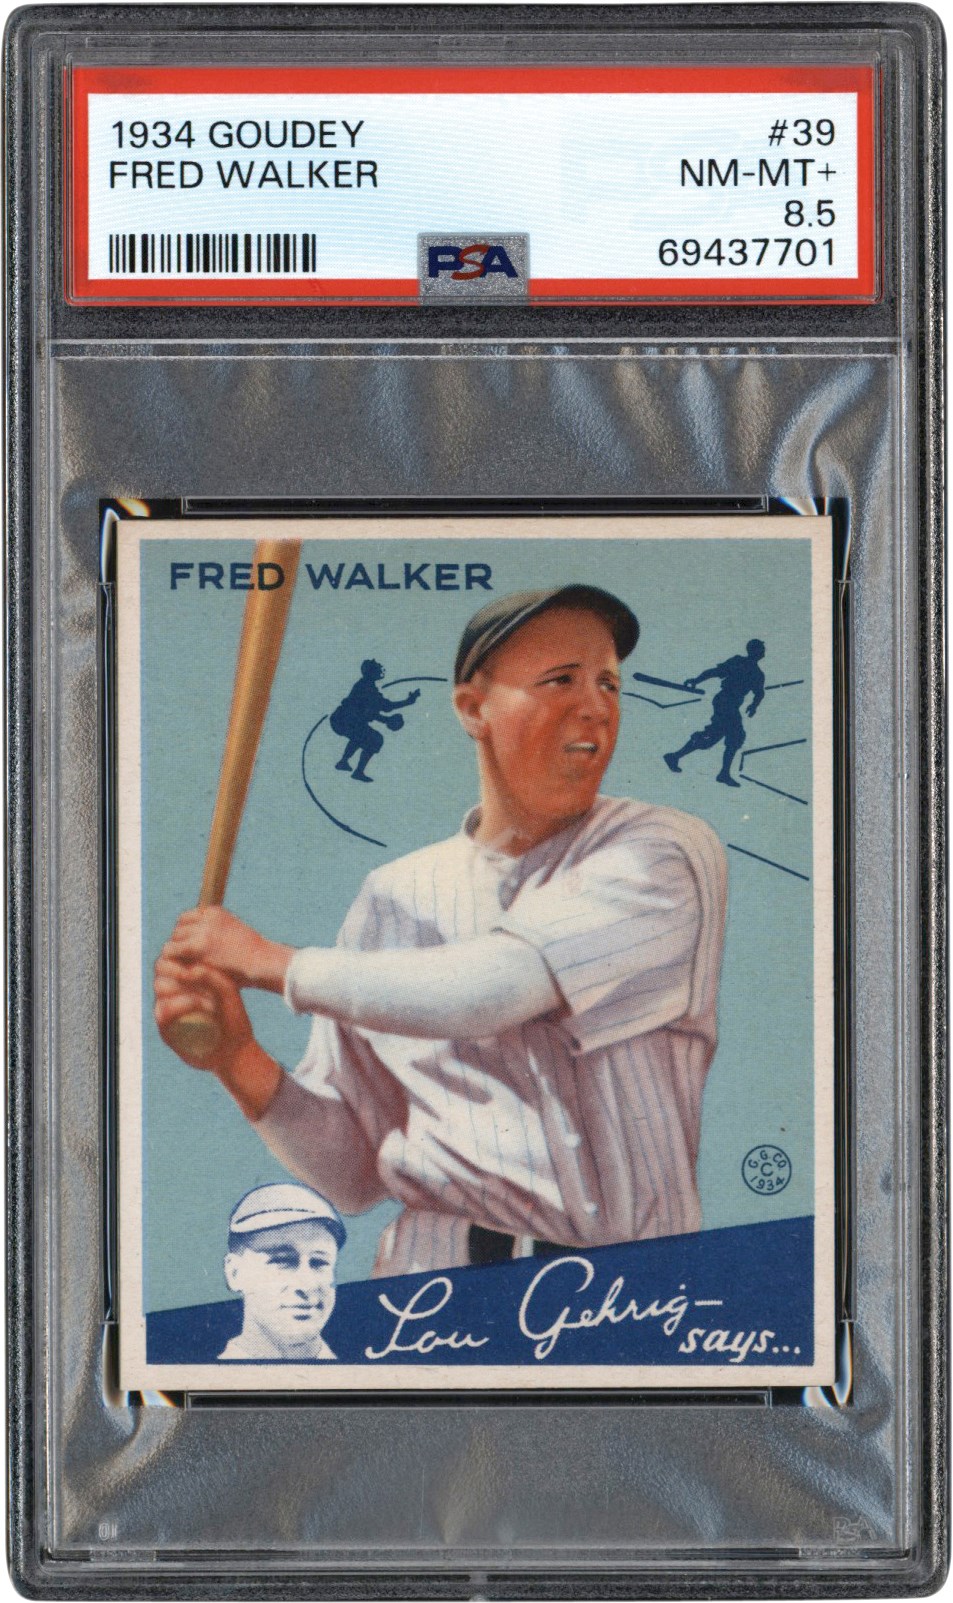 - 934 Goudey #39 Fred Walker PSA NM-MT+ 8.5